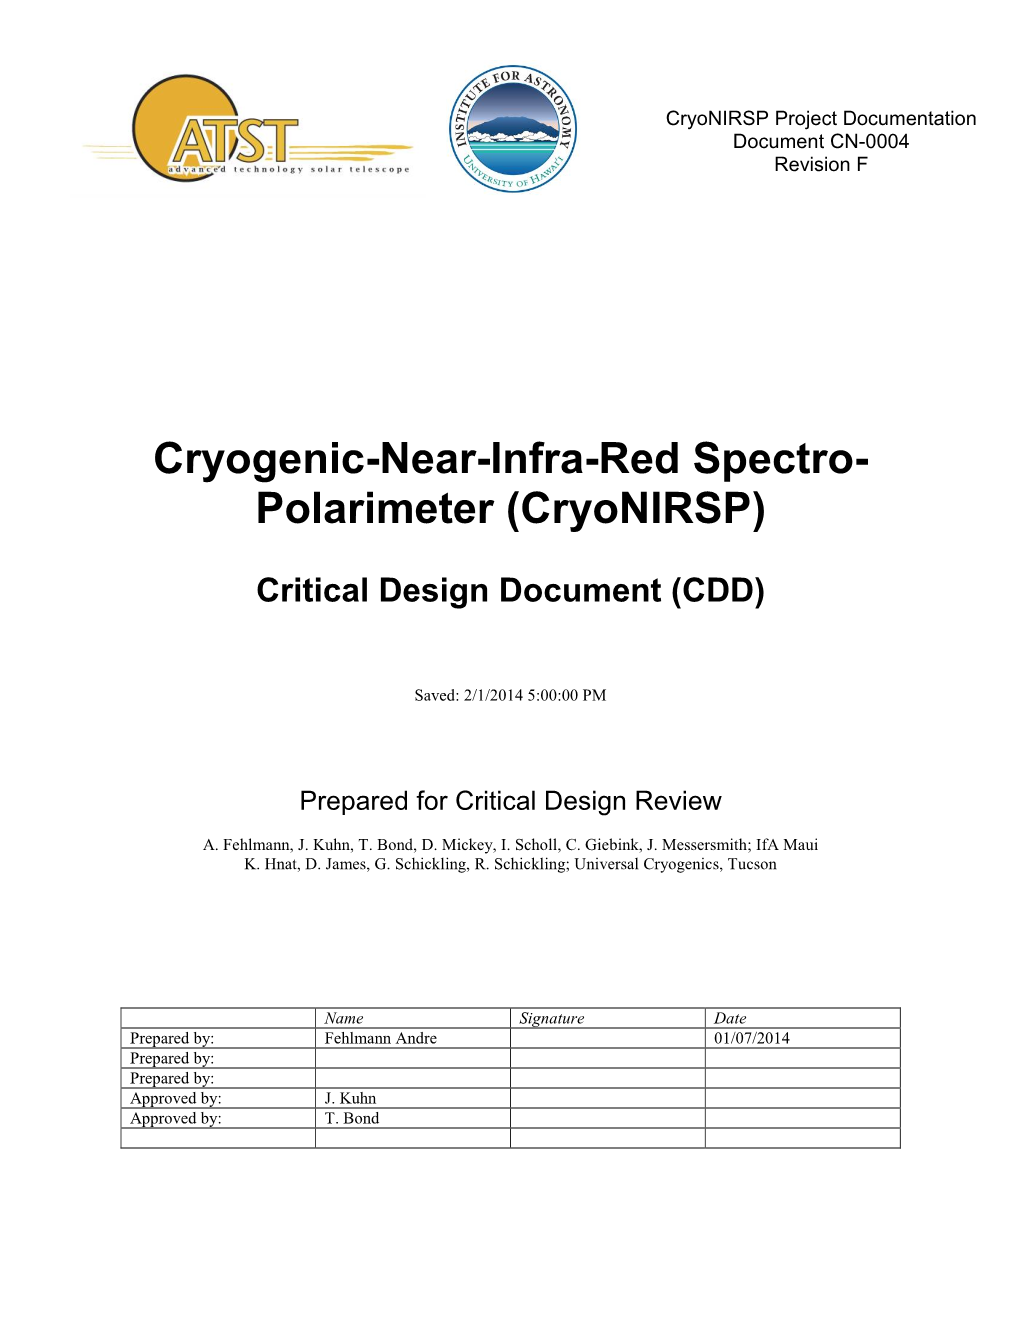 Critical Design Document (CDD)